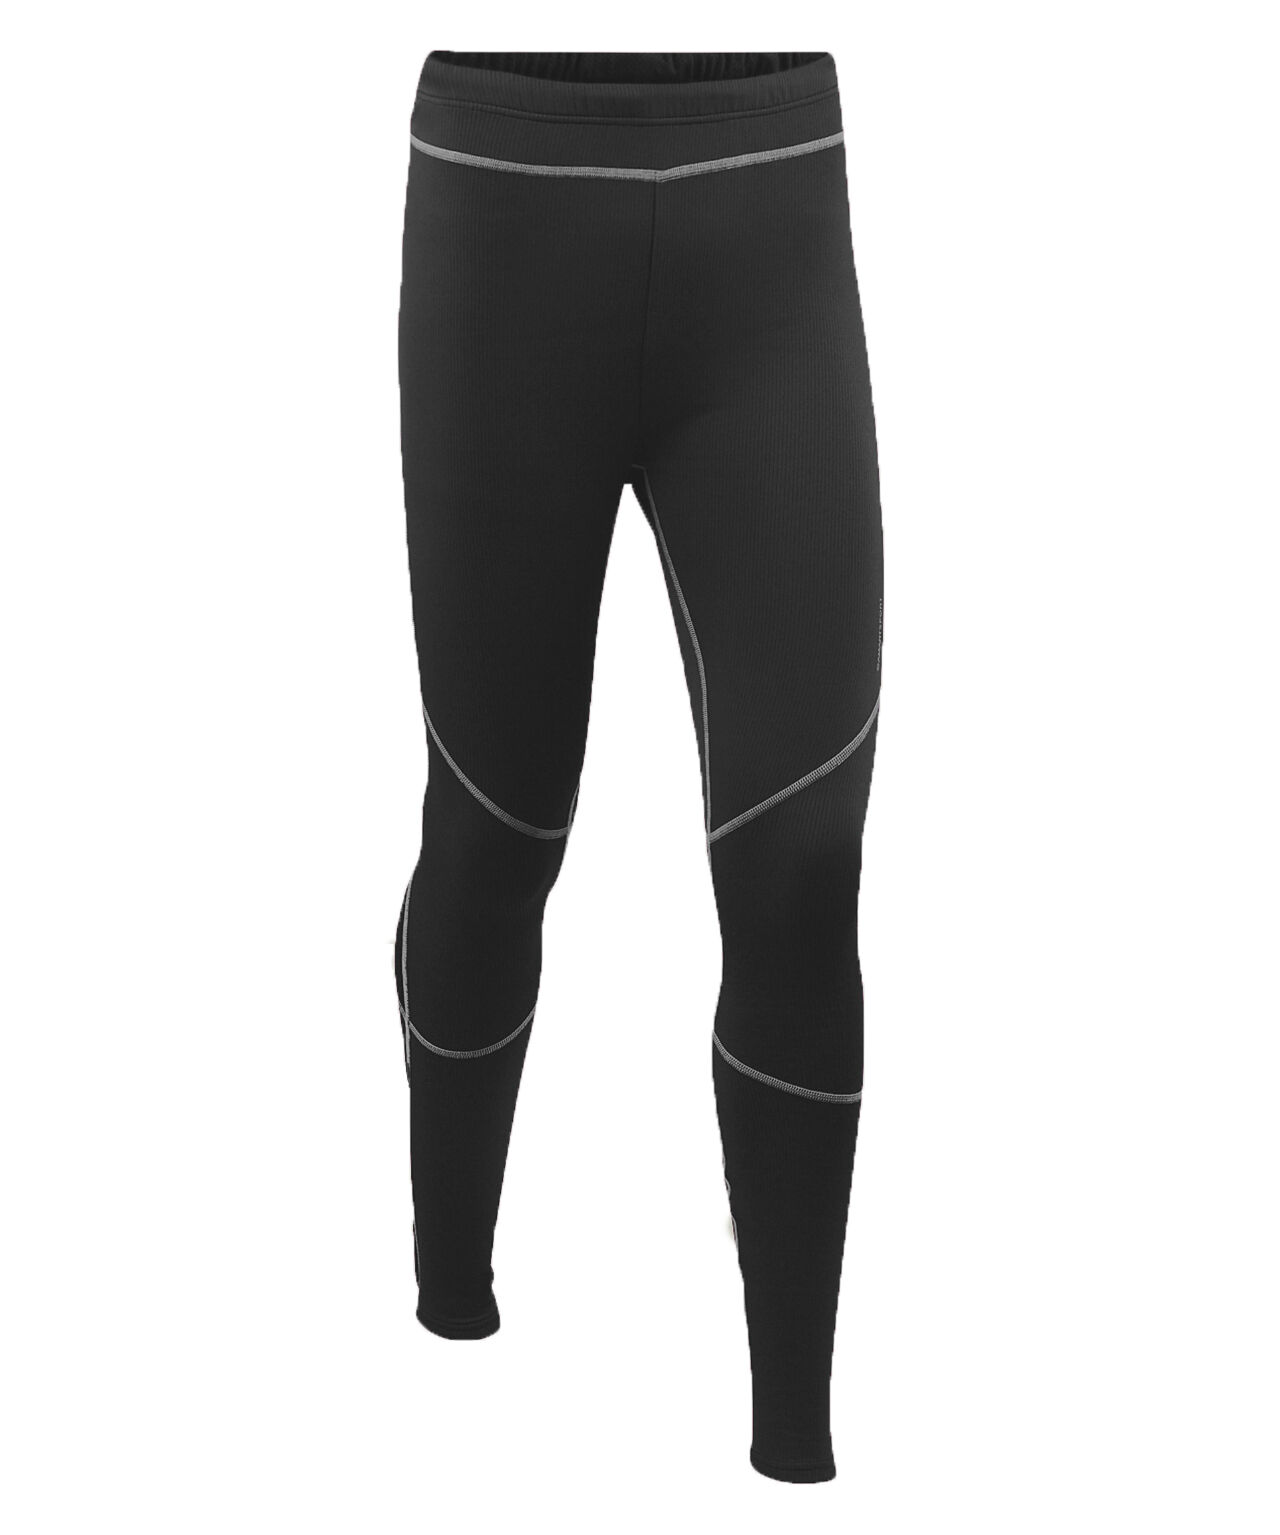 Damart Sport - Activ Body 4 - Running trousers - Women's